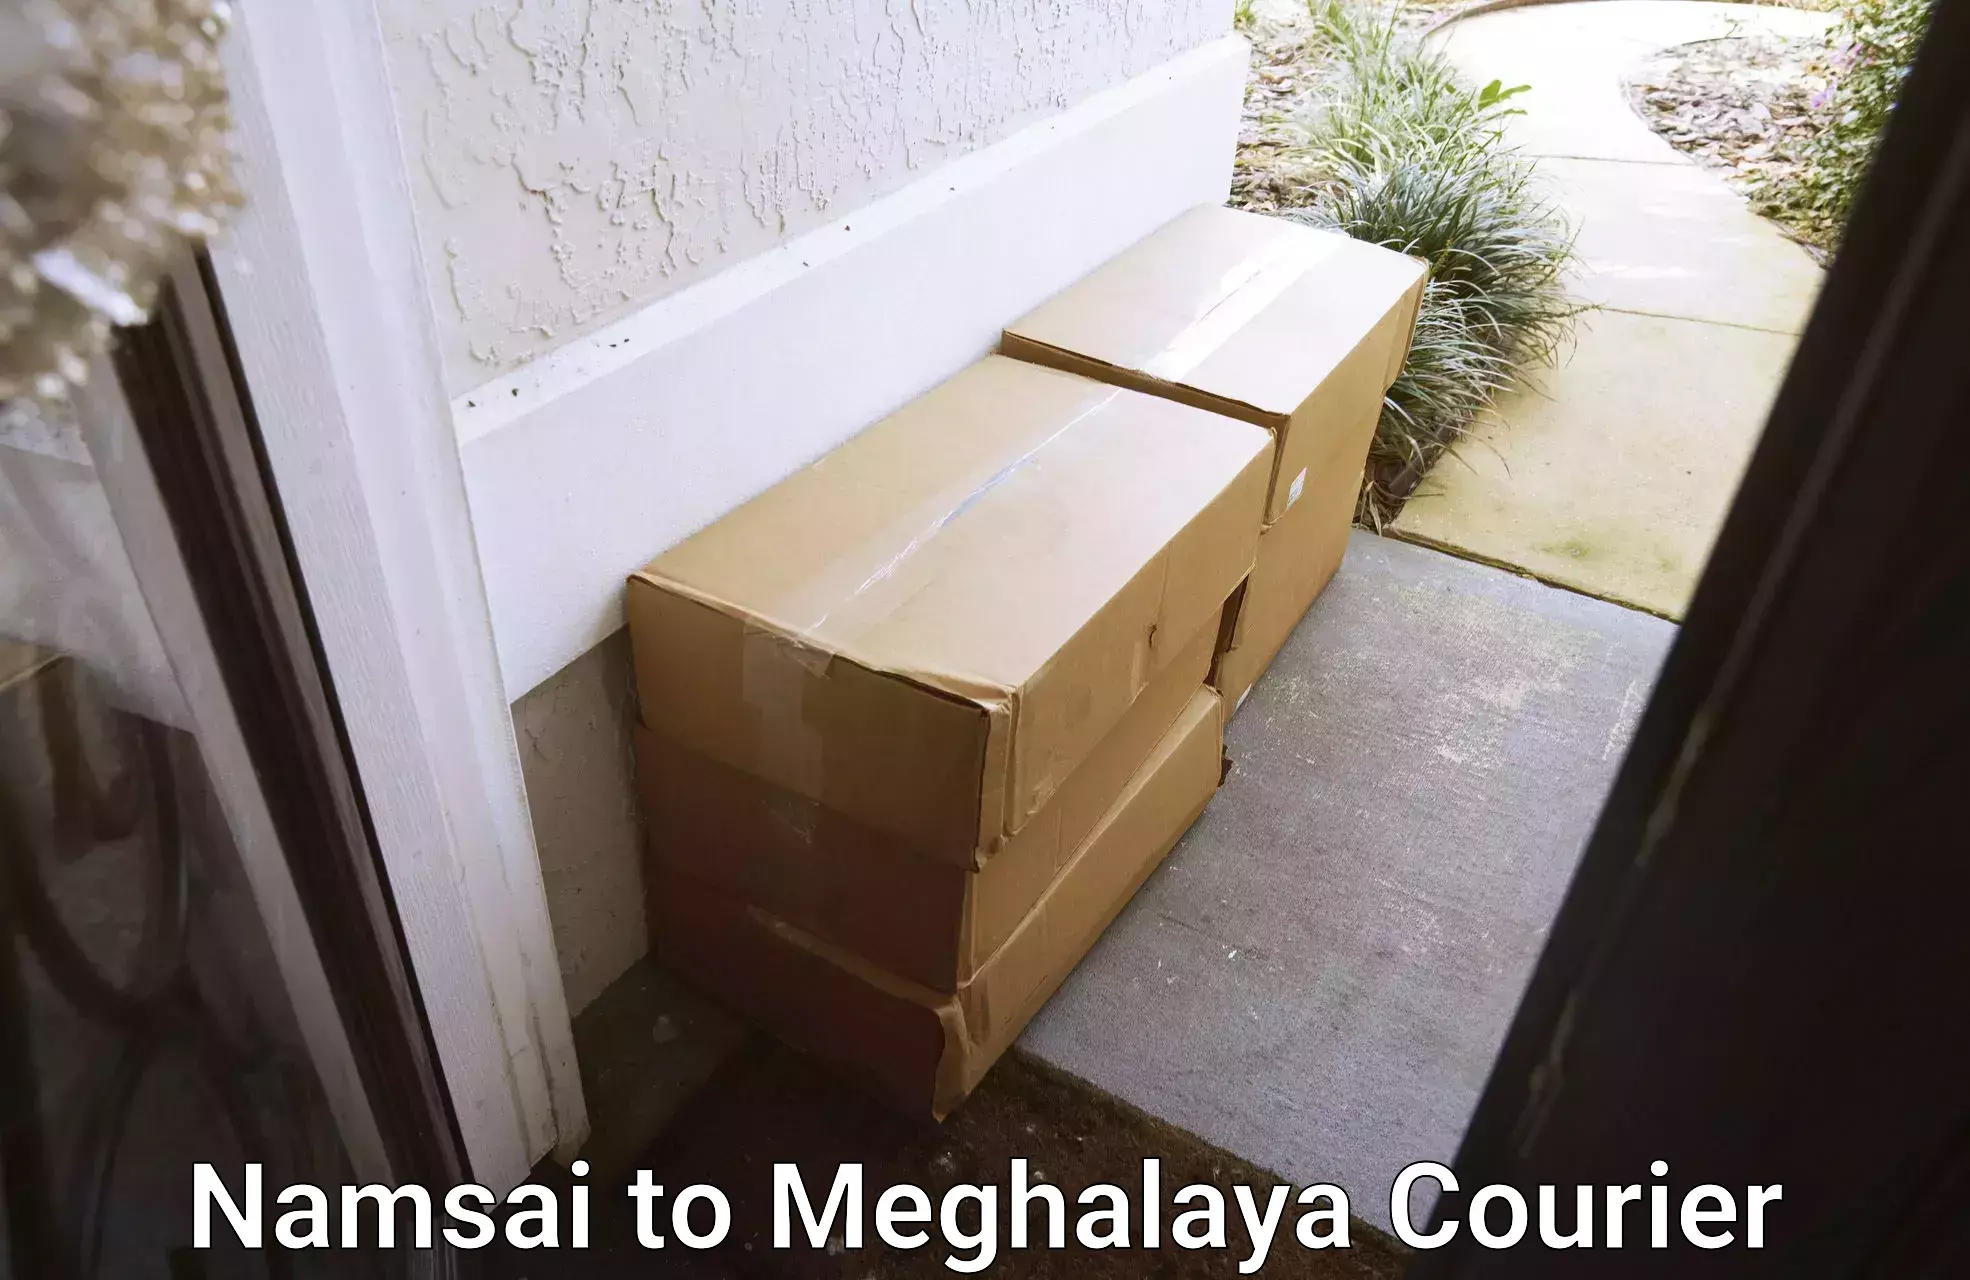 24/7 courier service Namsai to Meghalaya